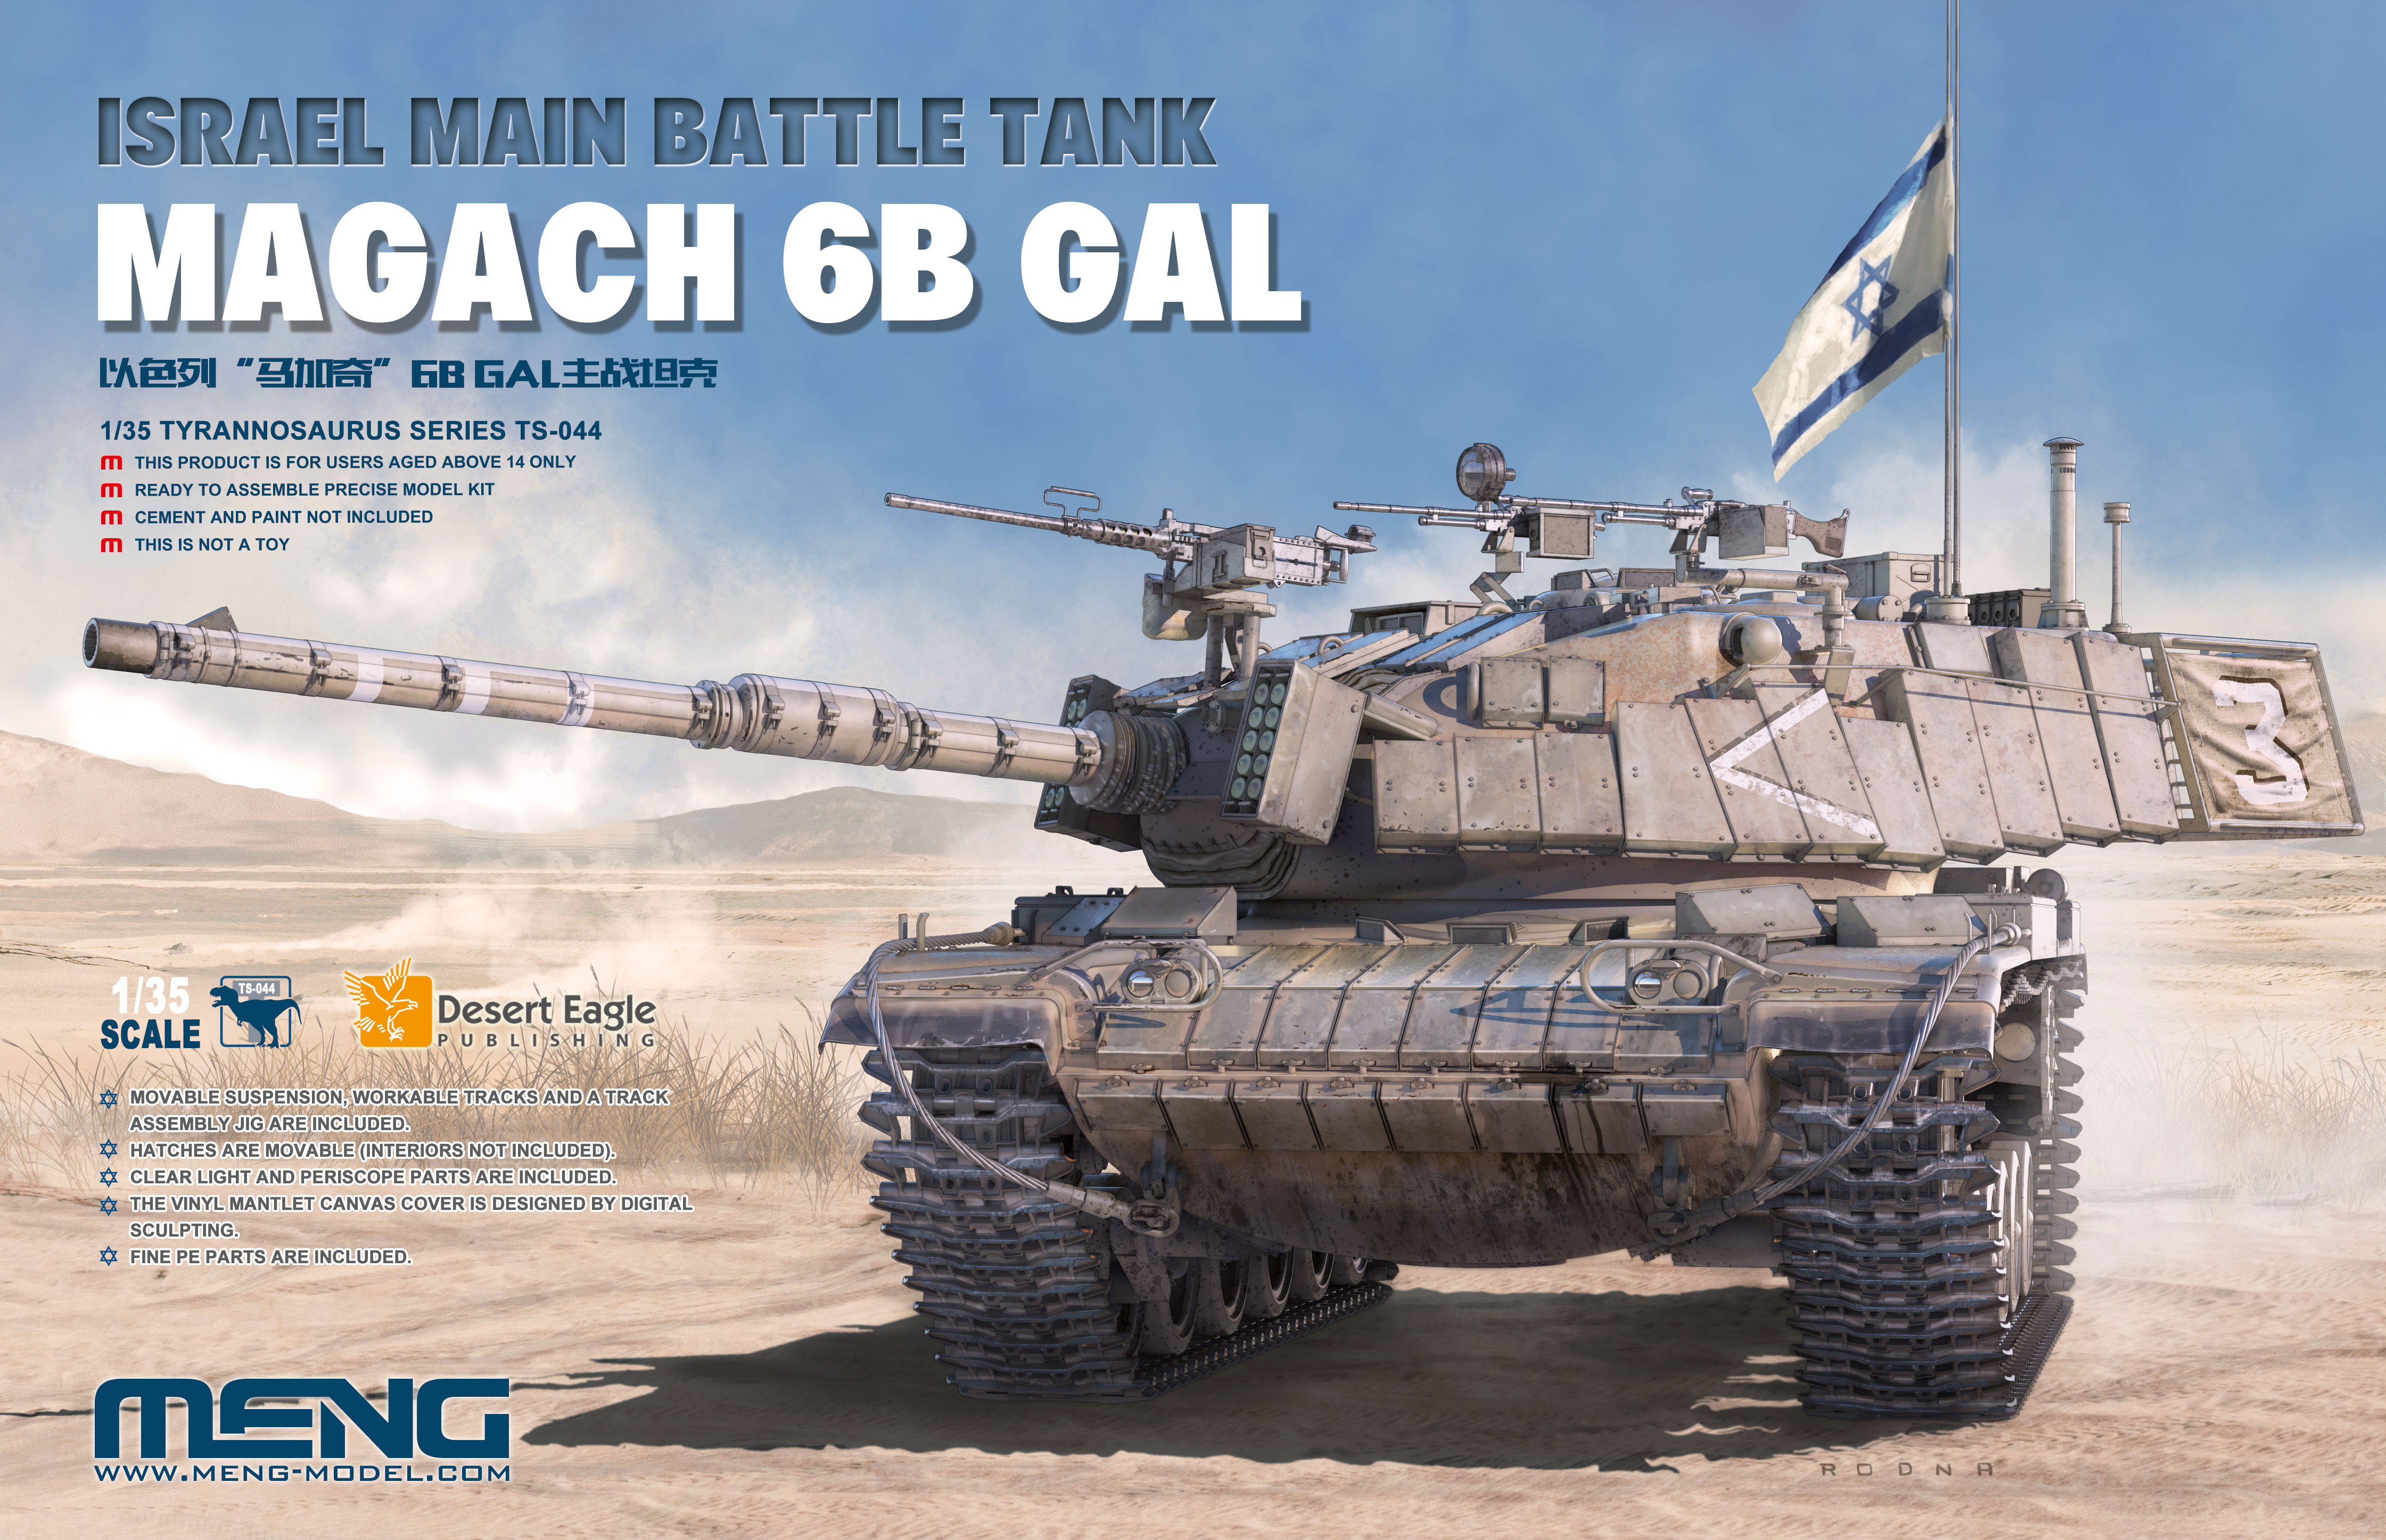 TS-044  техника и вооружение  Israel Main Battle Tank Magach 6B Gal  (1:35)